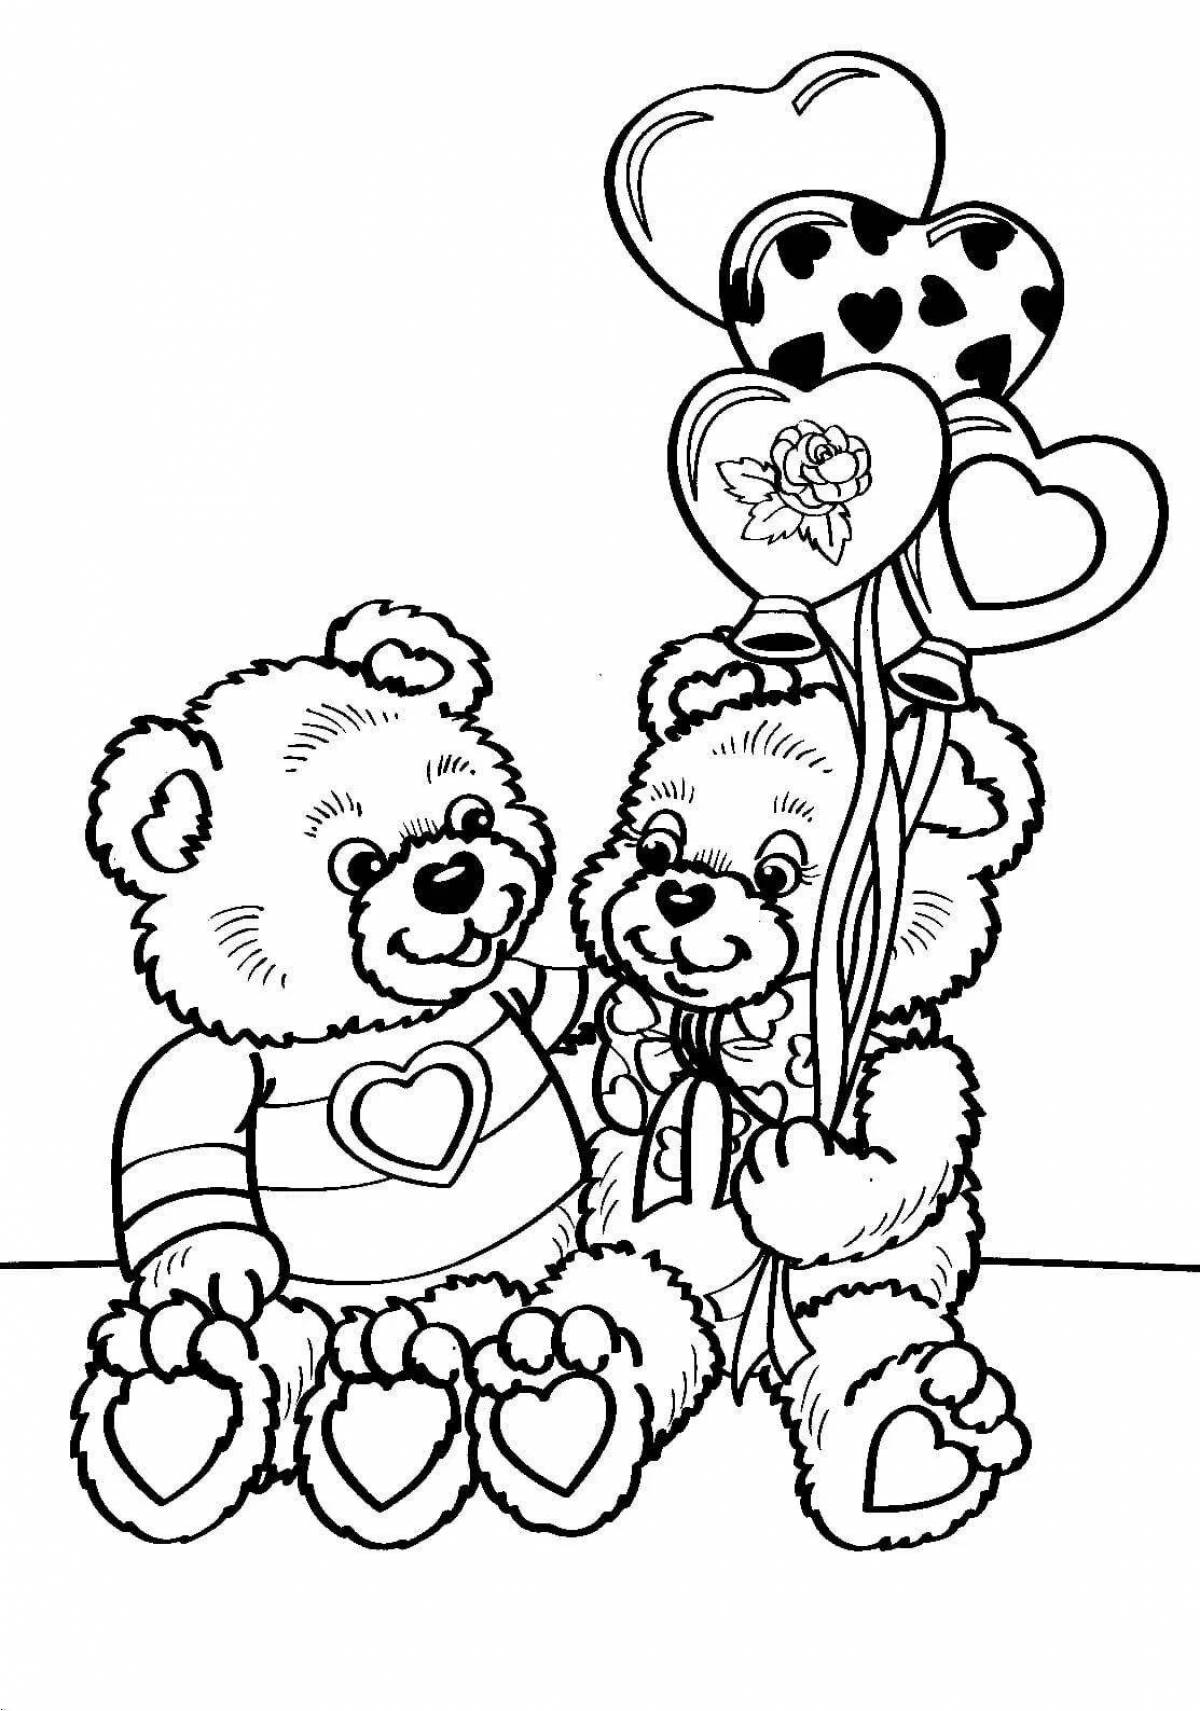 Cute bear brothers coloring book